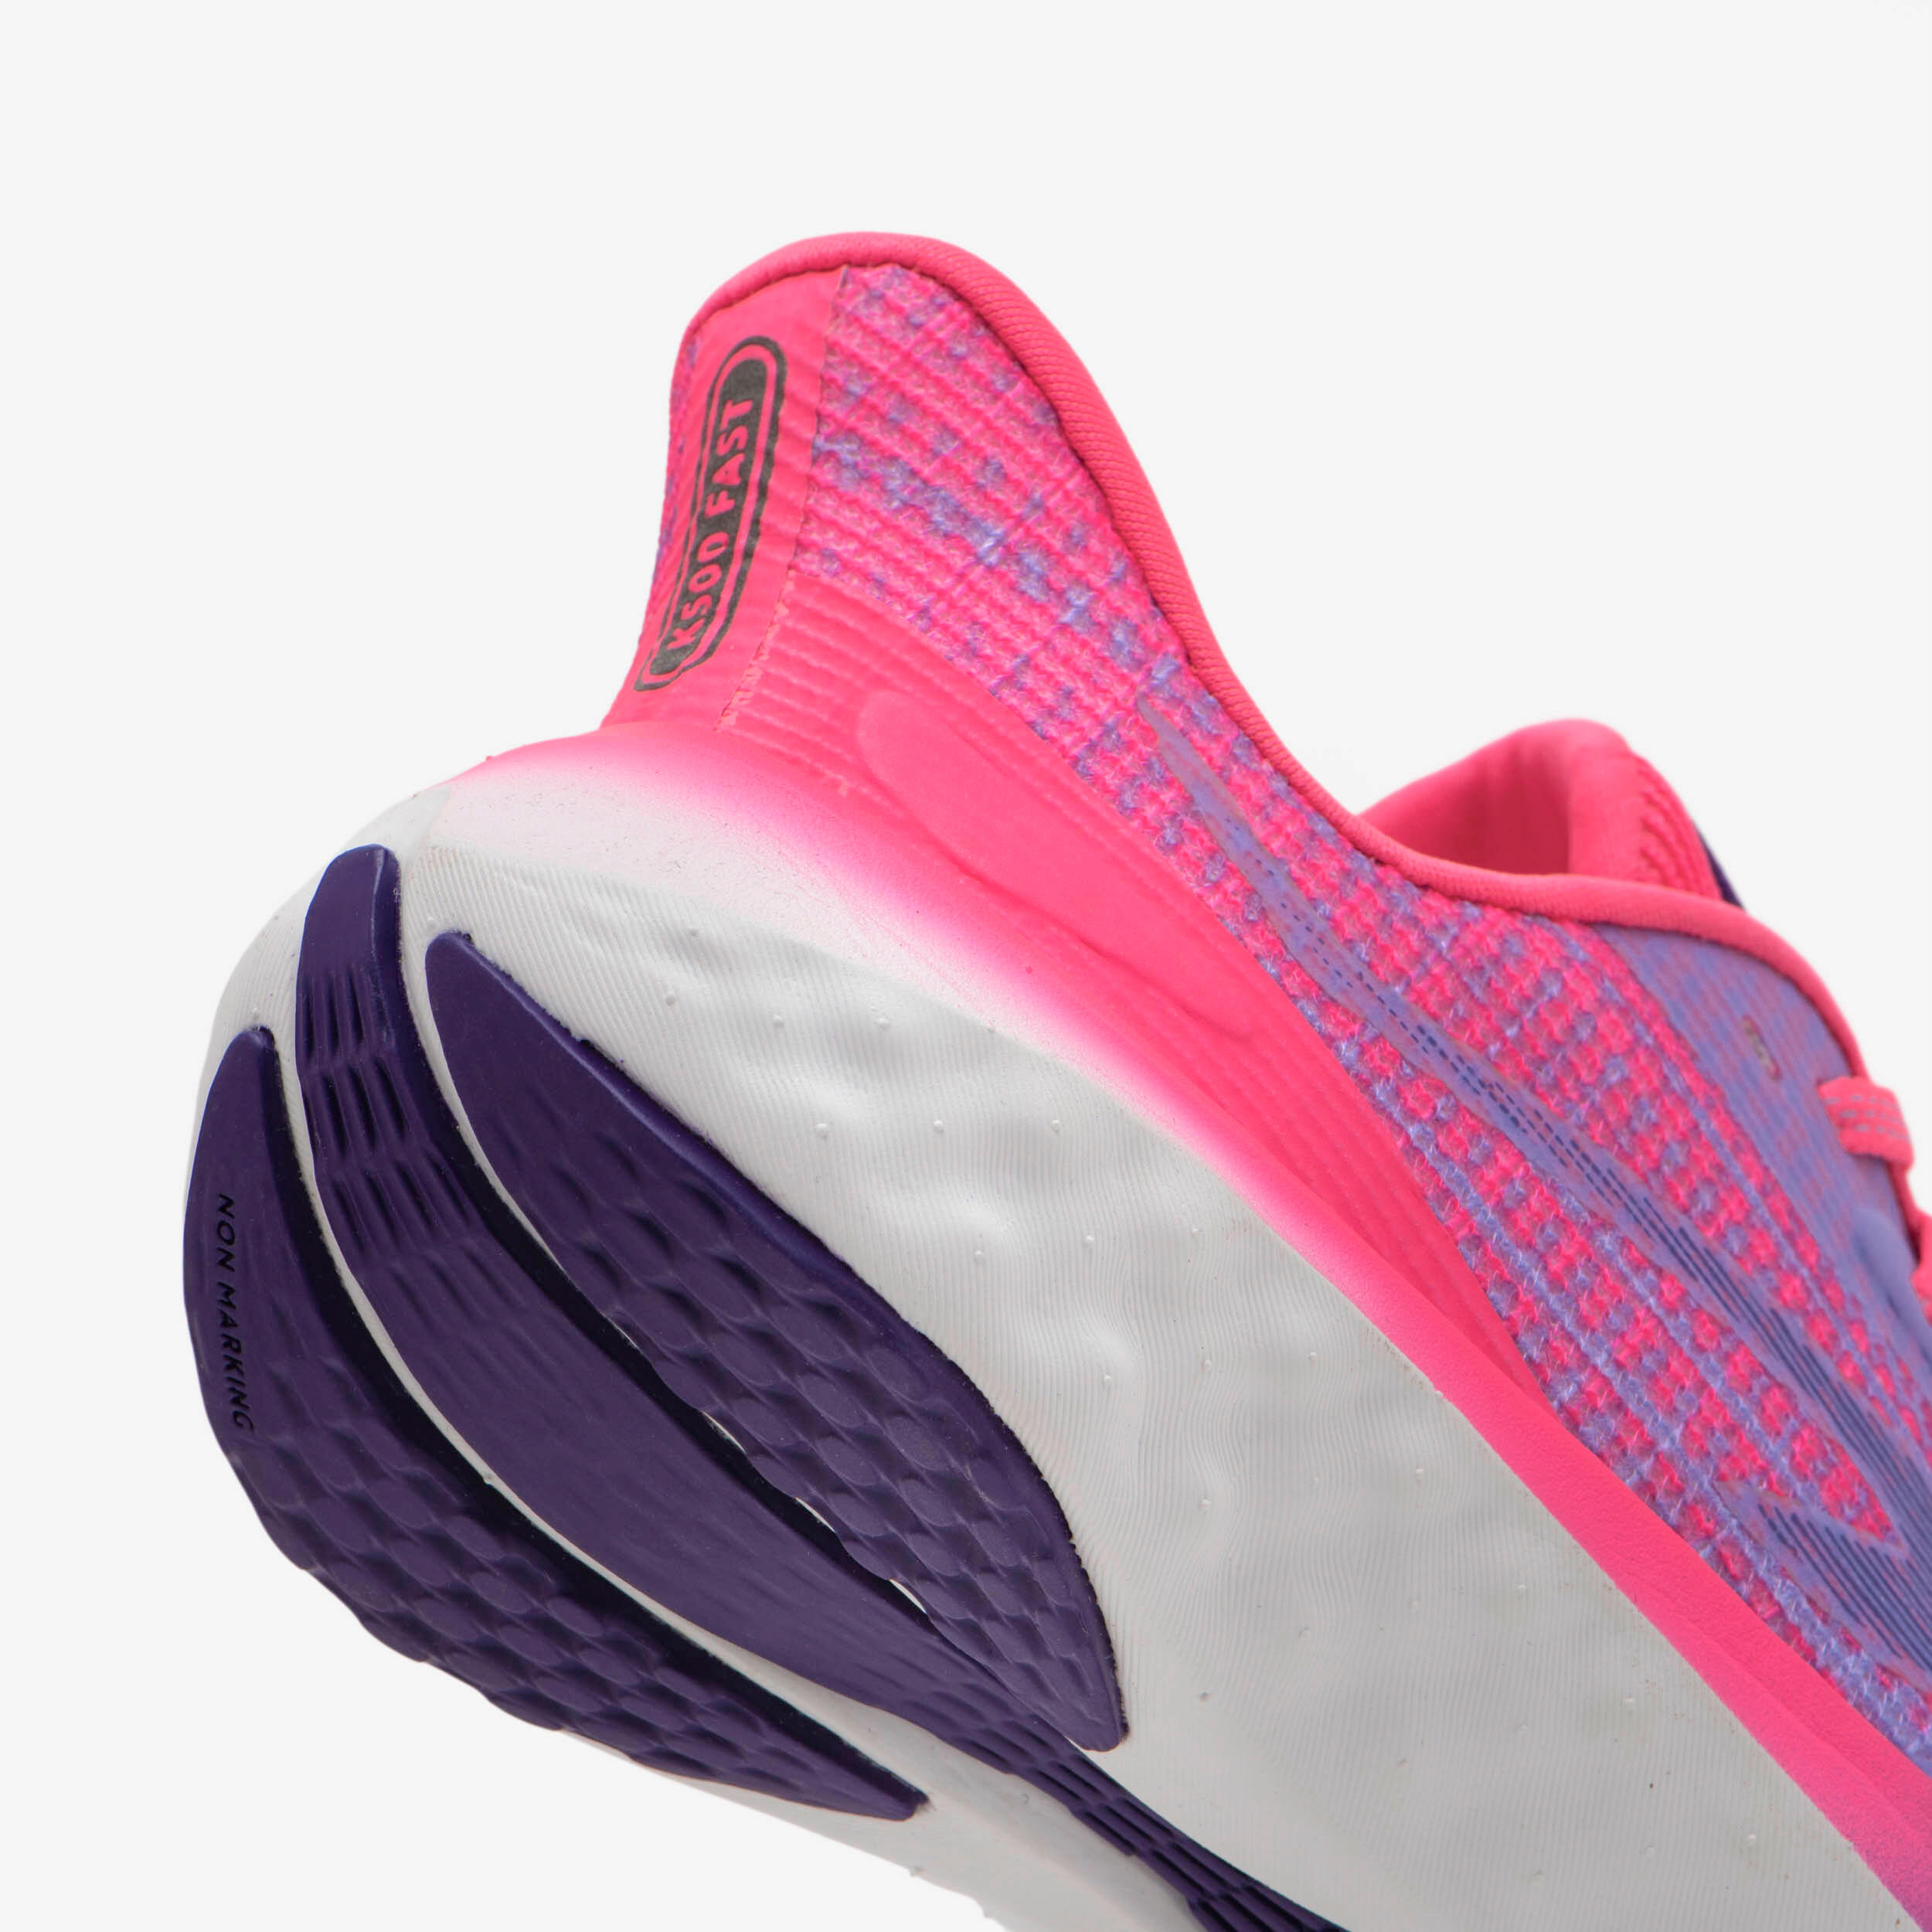 KIDS' KIPRUN K500 FAST running shoes - purple and pink 5/9